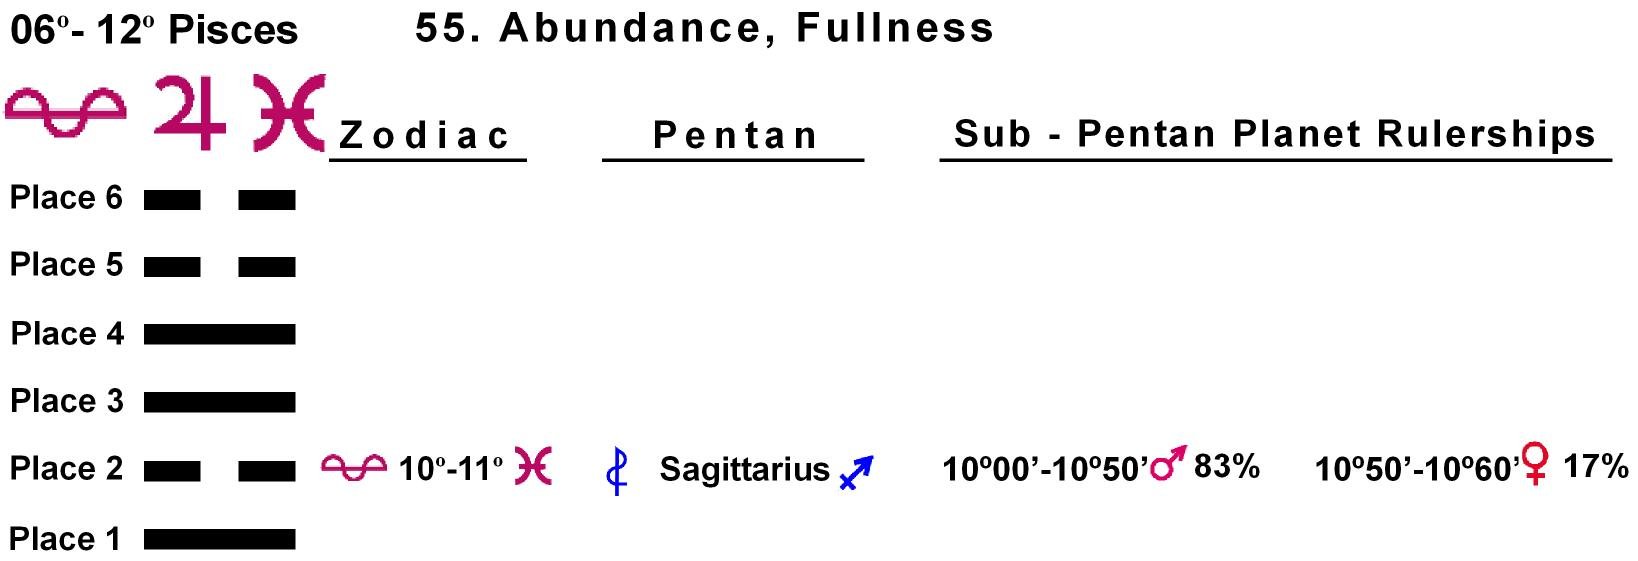 Pent-lines-12PI 10-11 Hx-55 Abundance